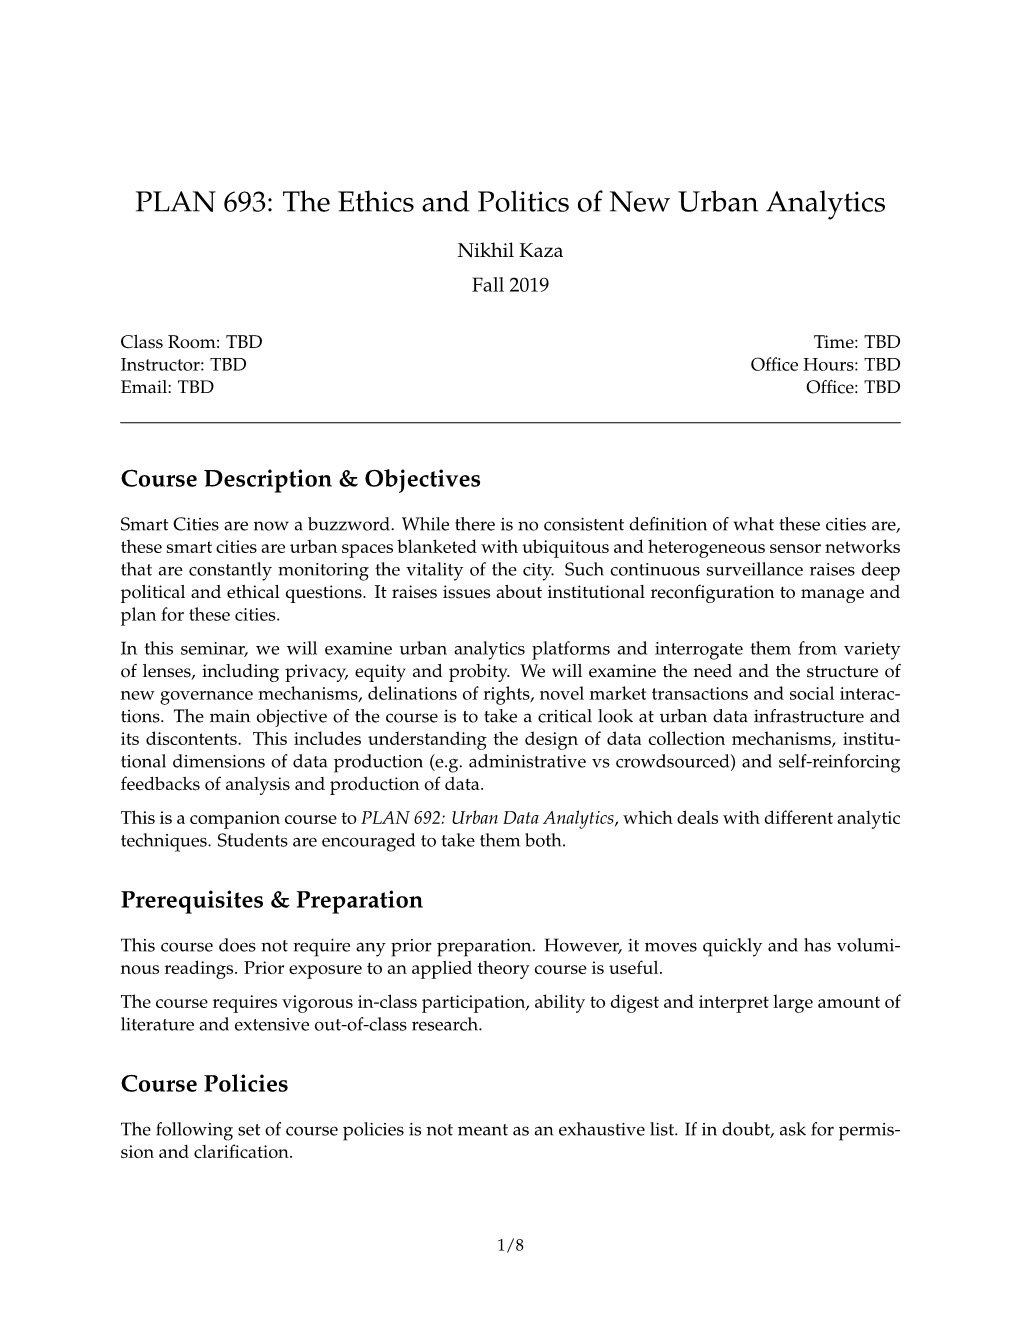 PLAN 693: the Ethics and Politics of New Urban Analytics